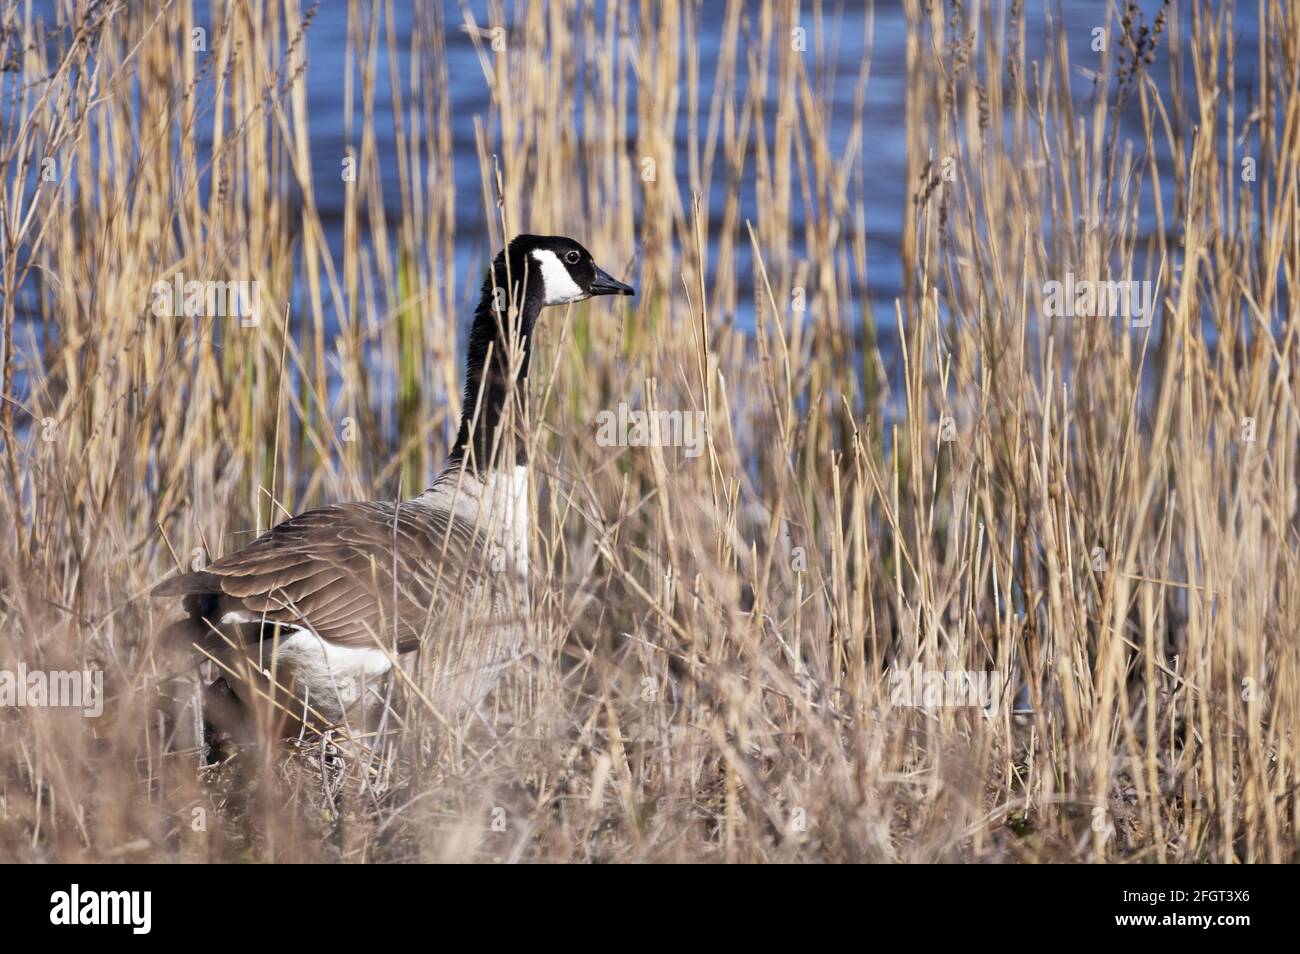 Canada goose adult, Branta canadensis, in reeds, Kingfishers Bridge nature reserve, Cambridgeshire England UK Stock Photo